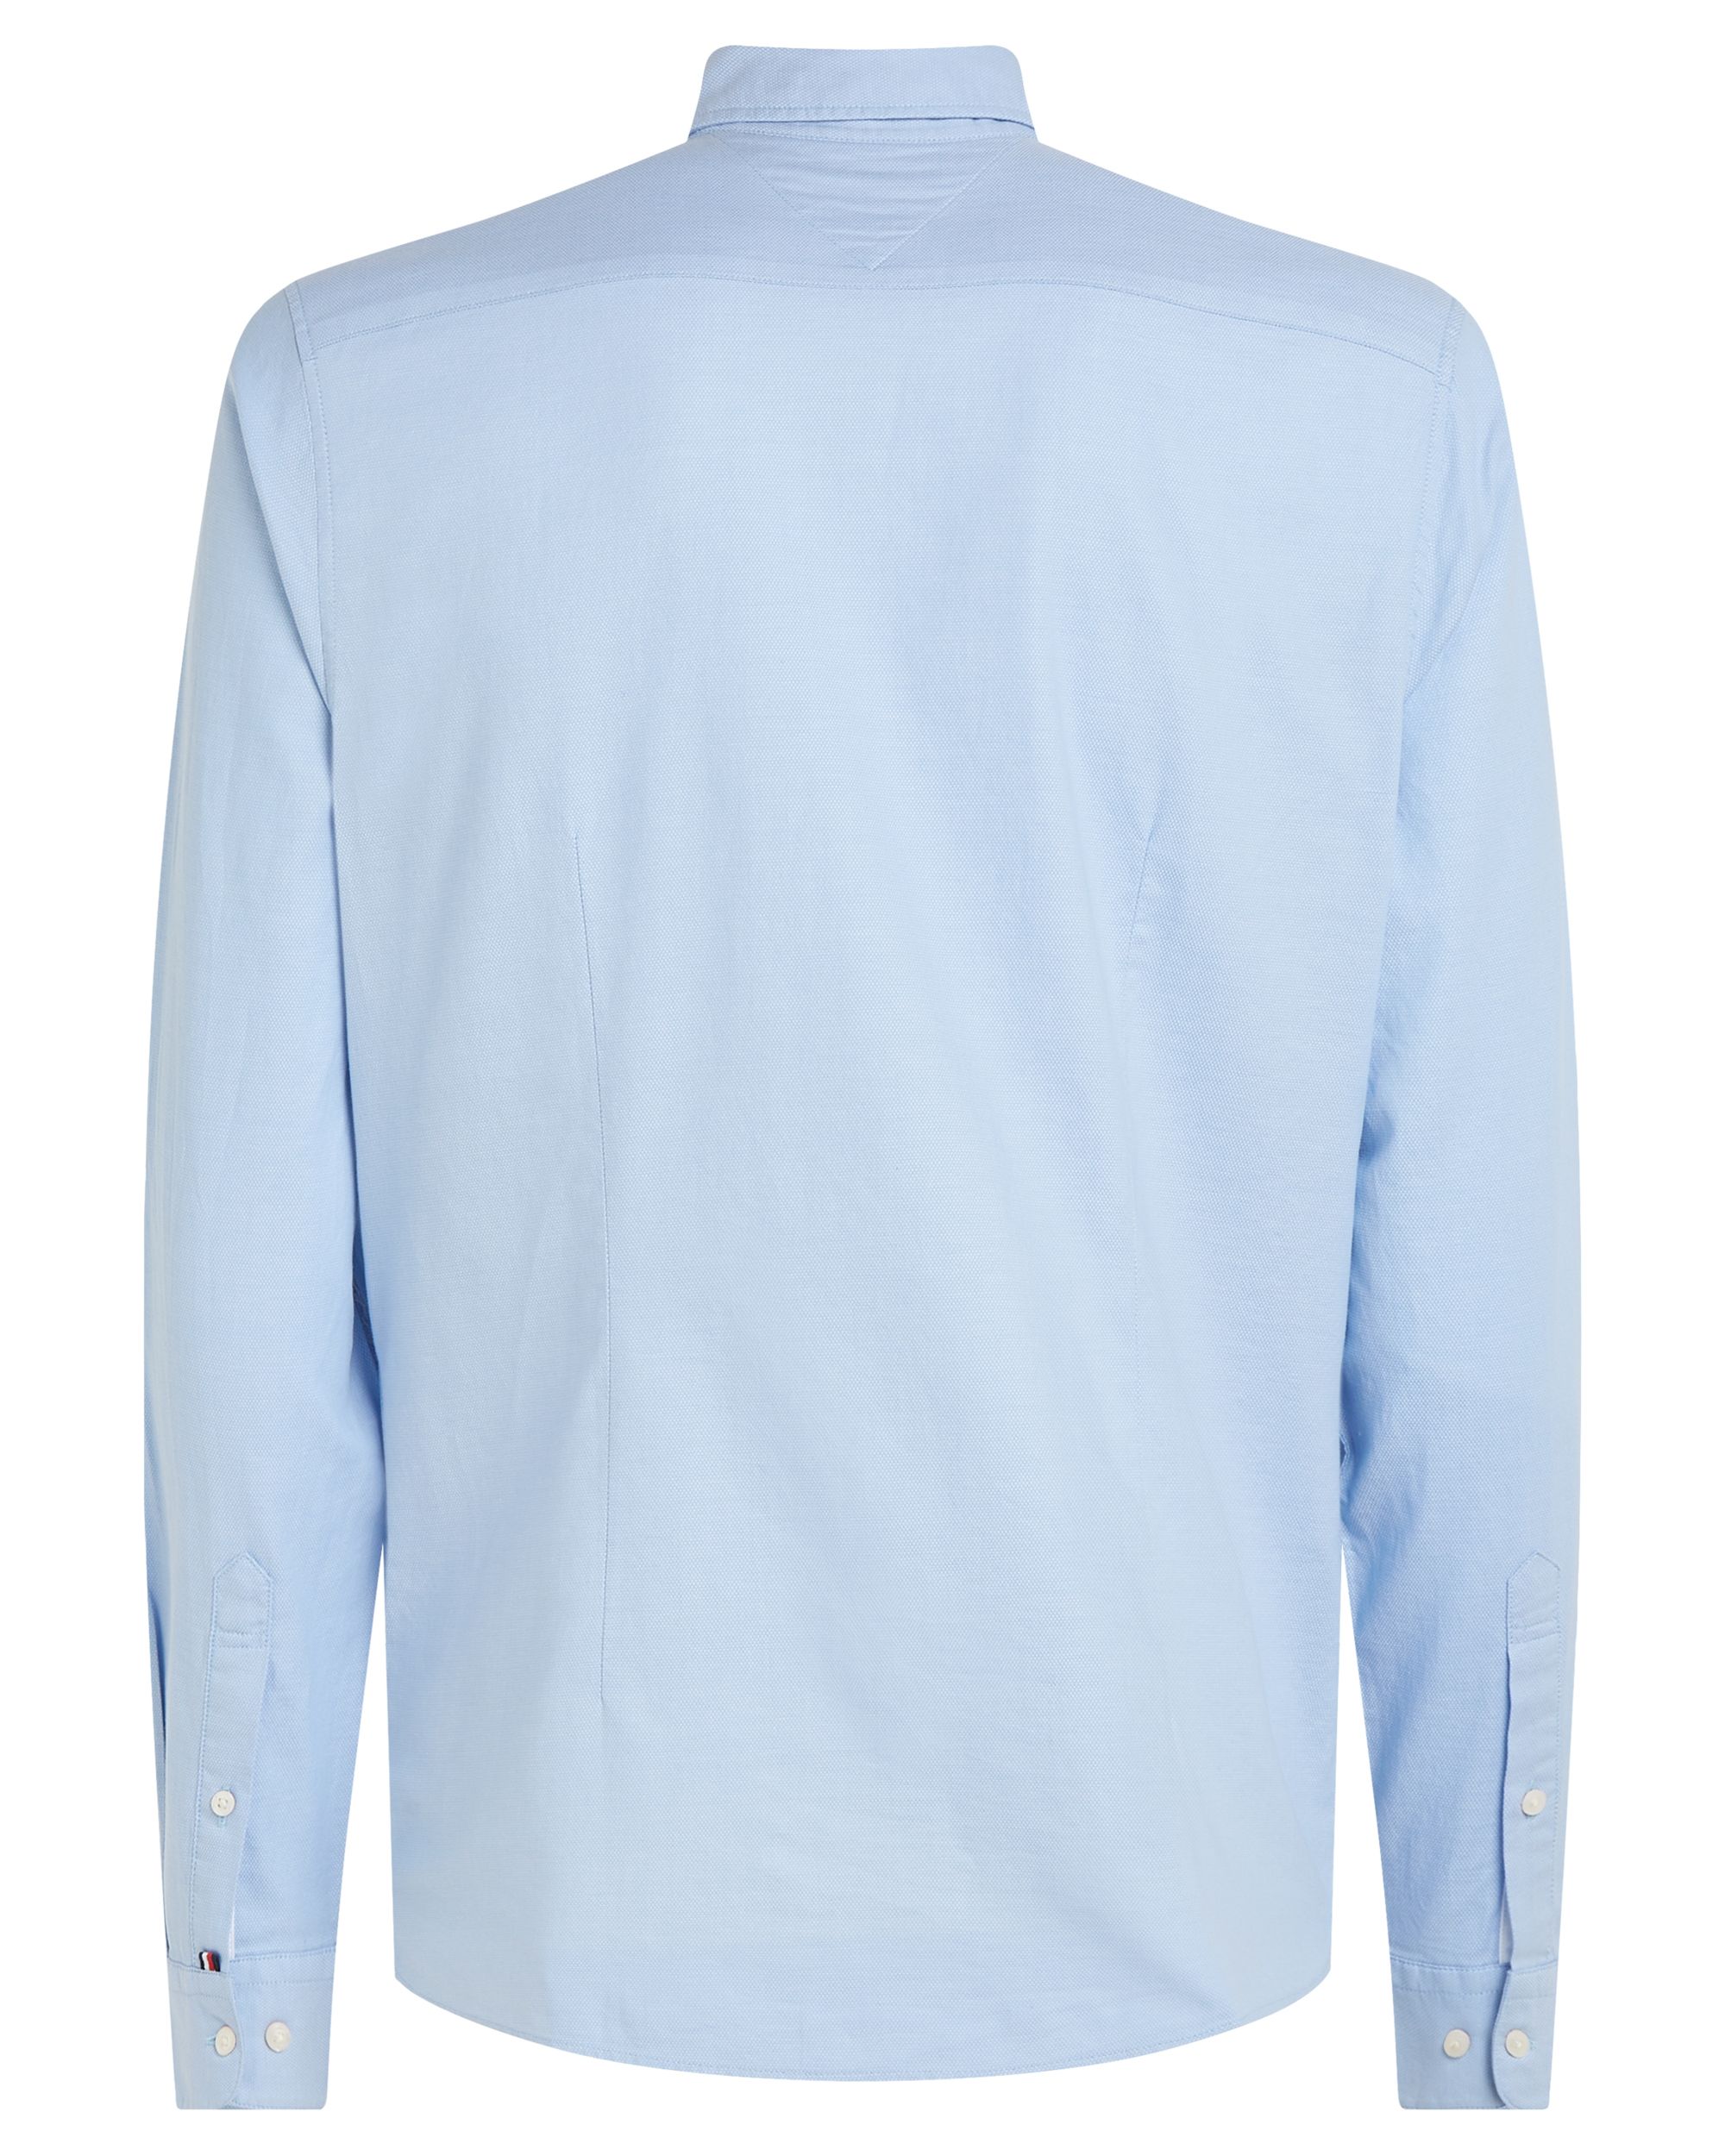 Tommy Hilfiger Menswear Casual Overhemd LM Licht blauw 094633-001-L